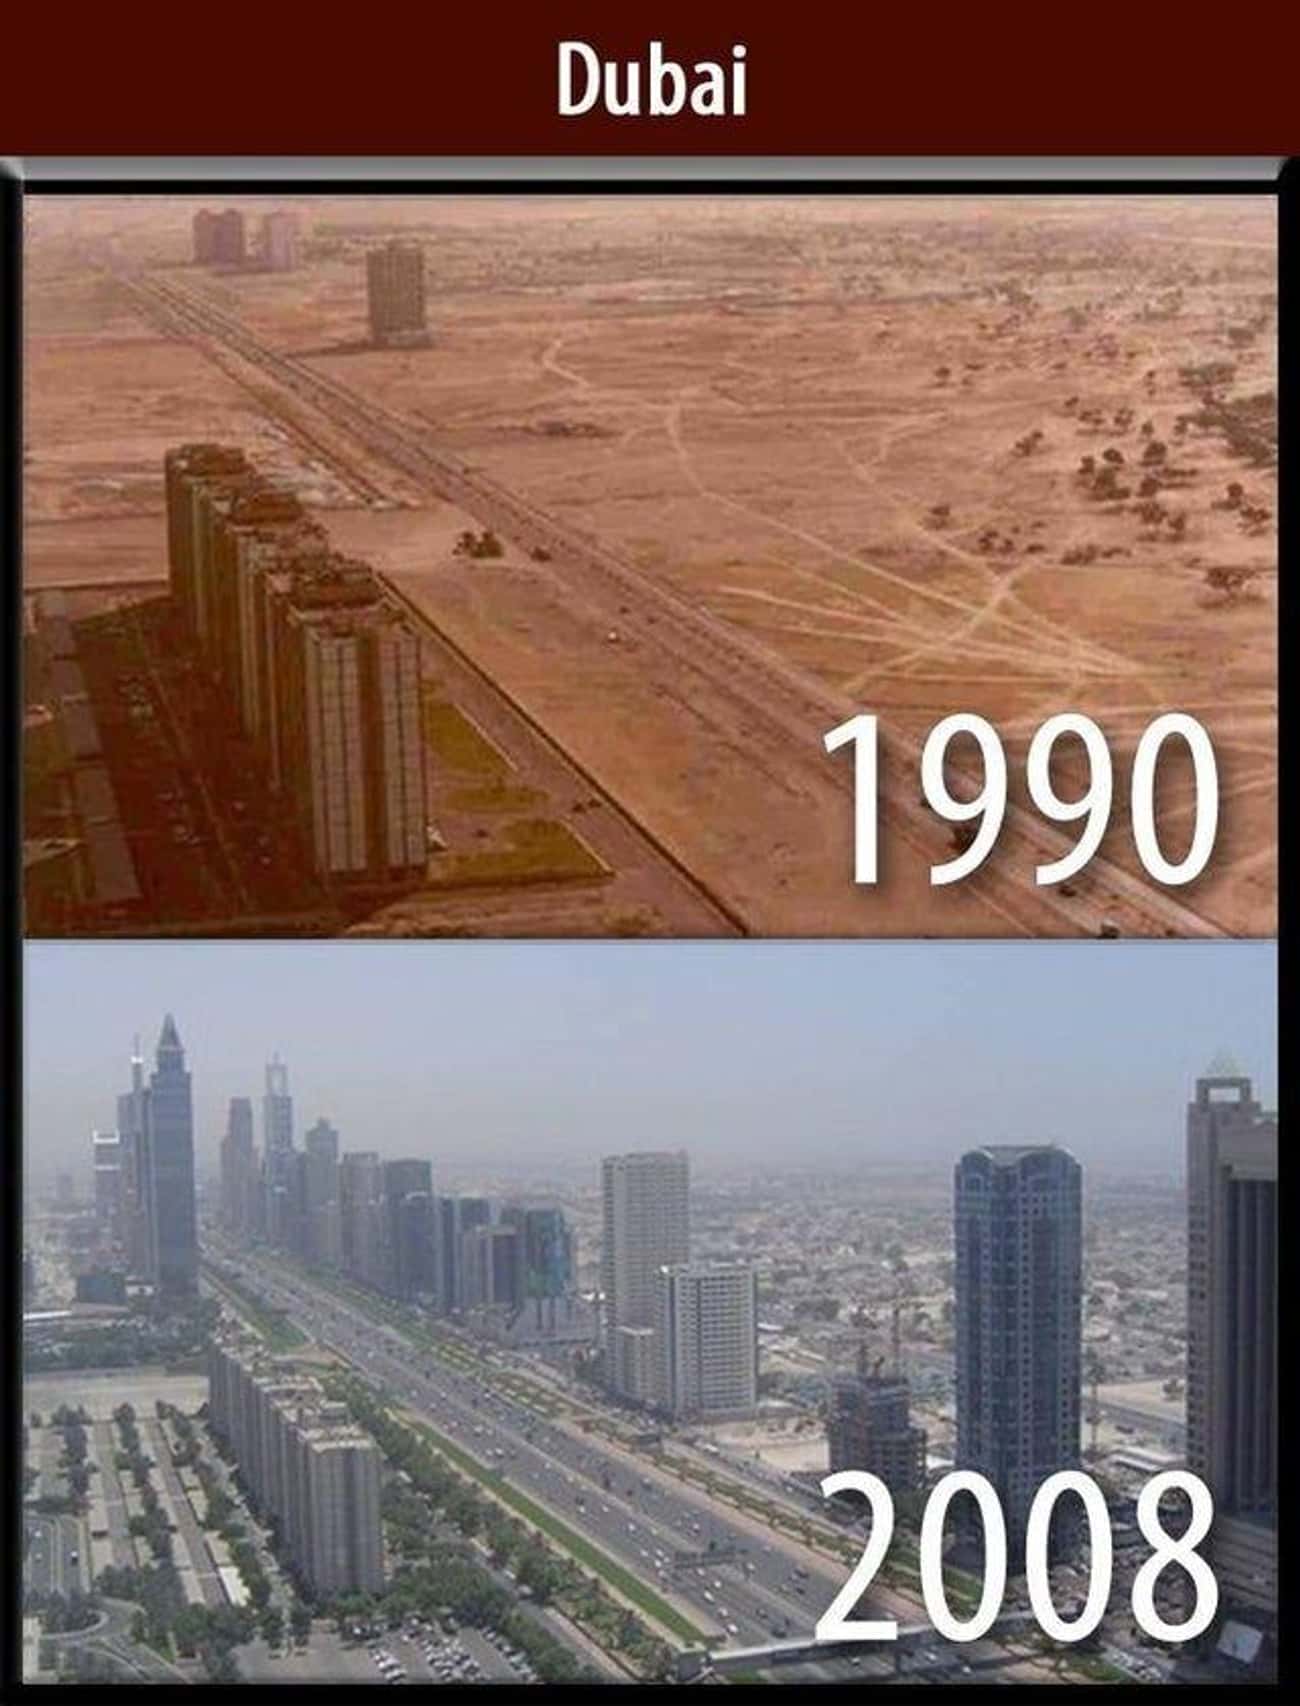 Dubai From Above, 1990 Vs. 2008